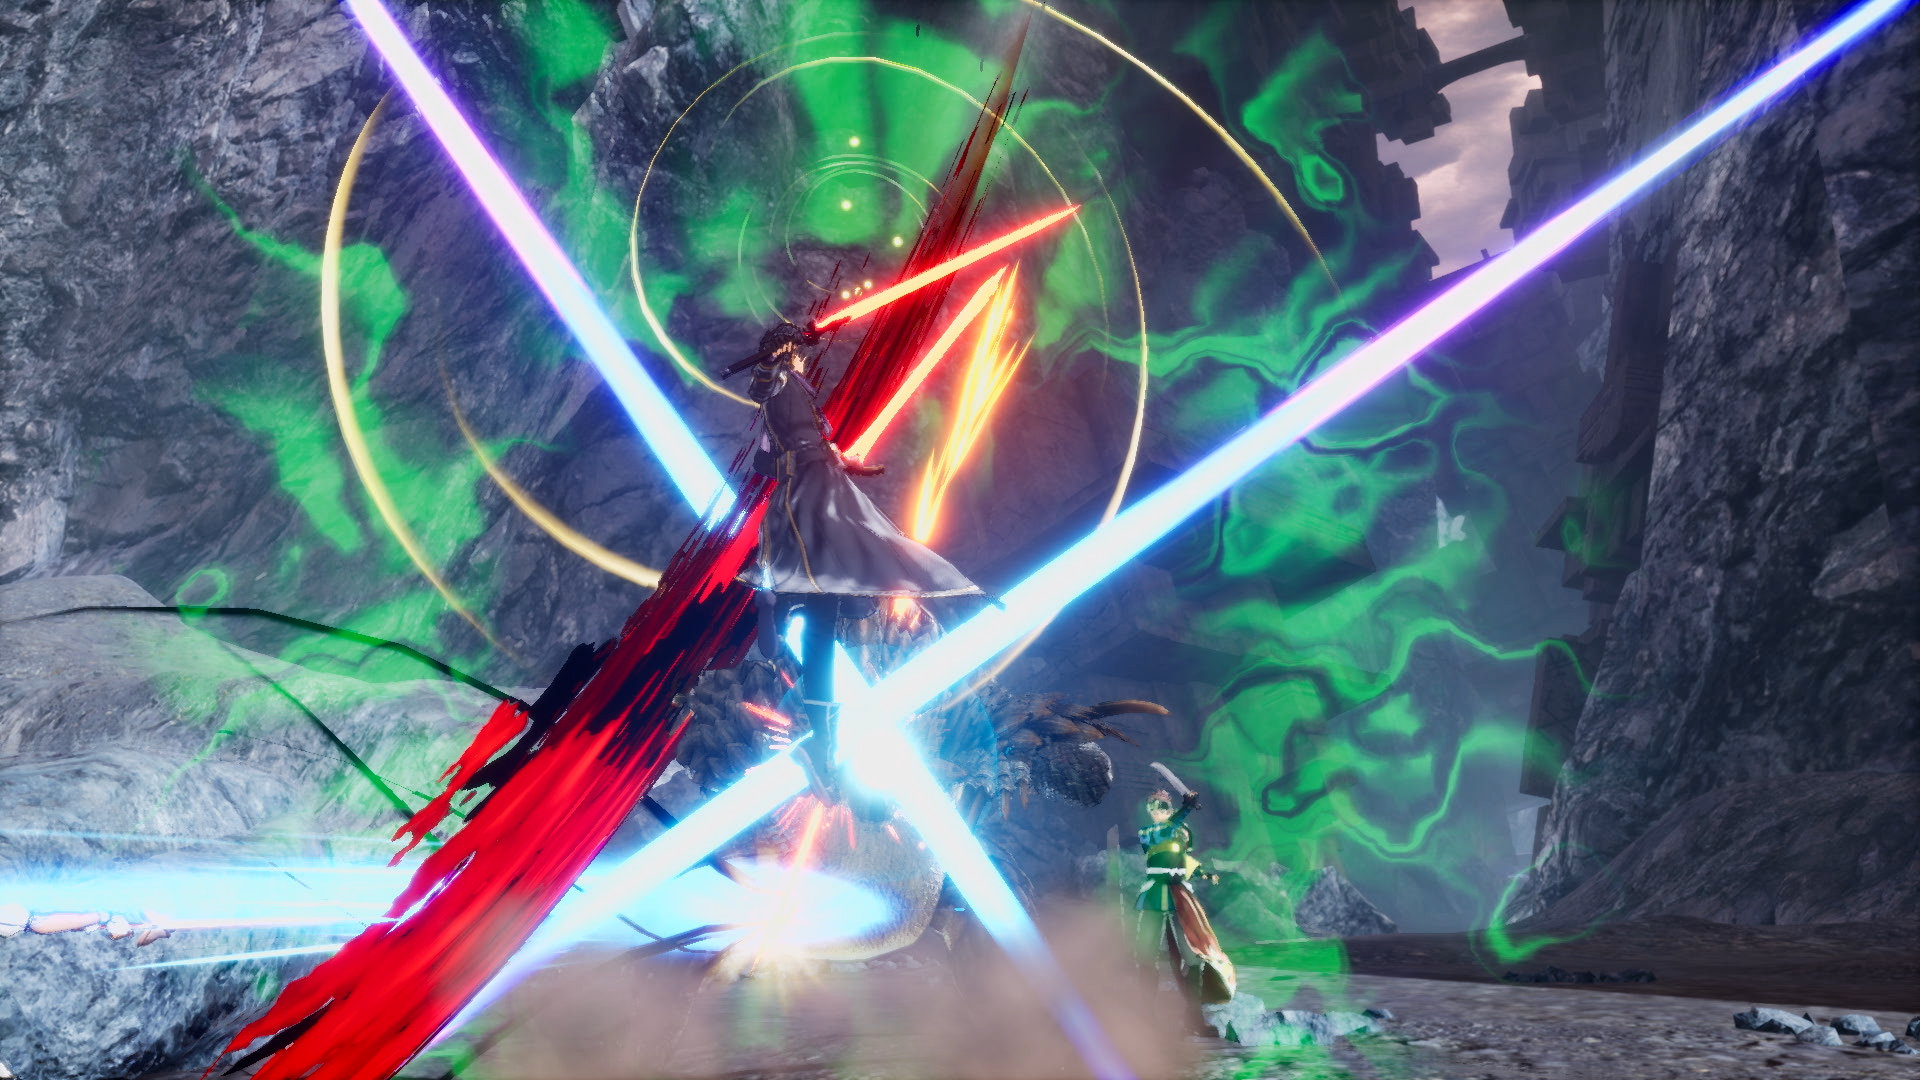 Atualizado] Novo trailer de Sword Art Online: Last Recollection